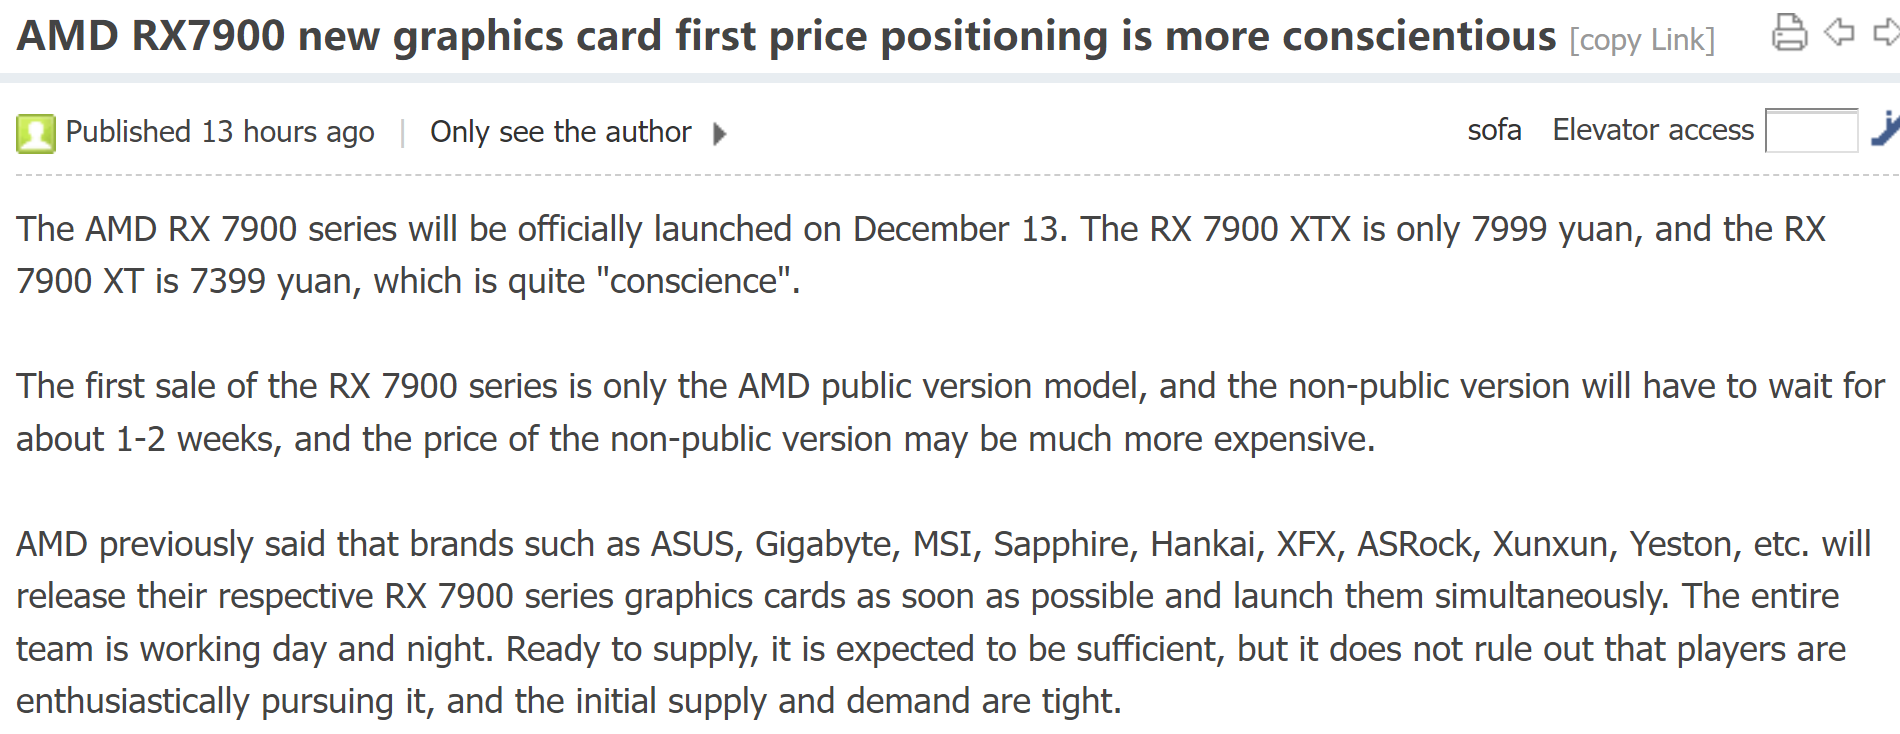 amd radeon rx 7900 launch info เผยการ์ดจอ AMD Radeon RX 7900 ในรุ่น Custom จะเปิดตัวประมาณ1 ถึง 2 สัปดาห์หลังจากการเปิดตัวการ์ดรุ่น Ref. 